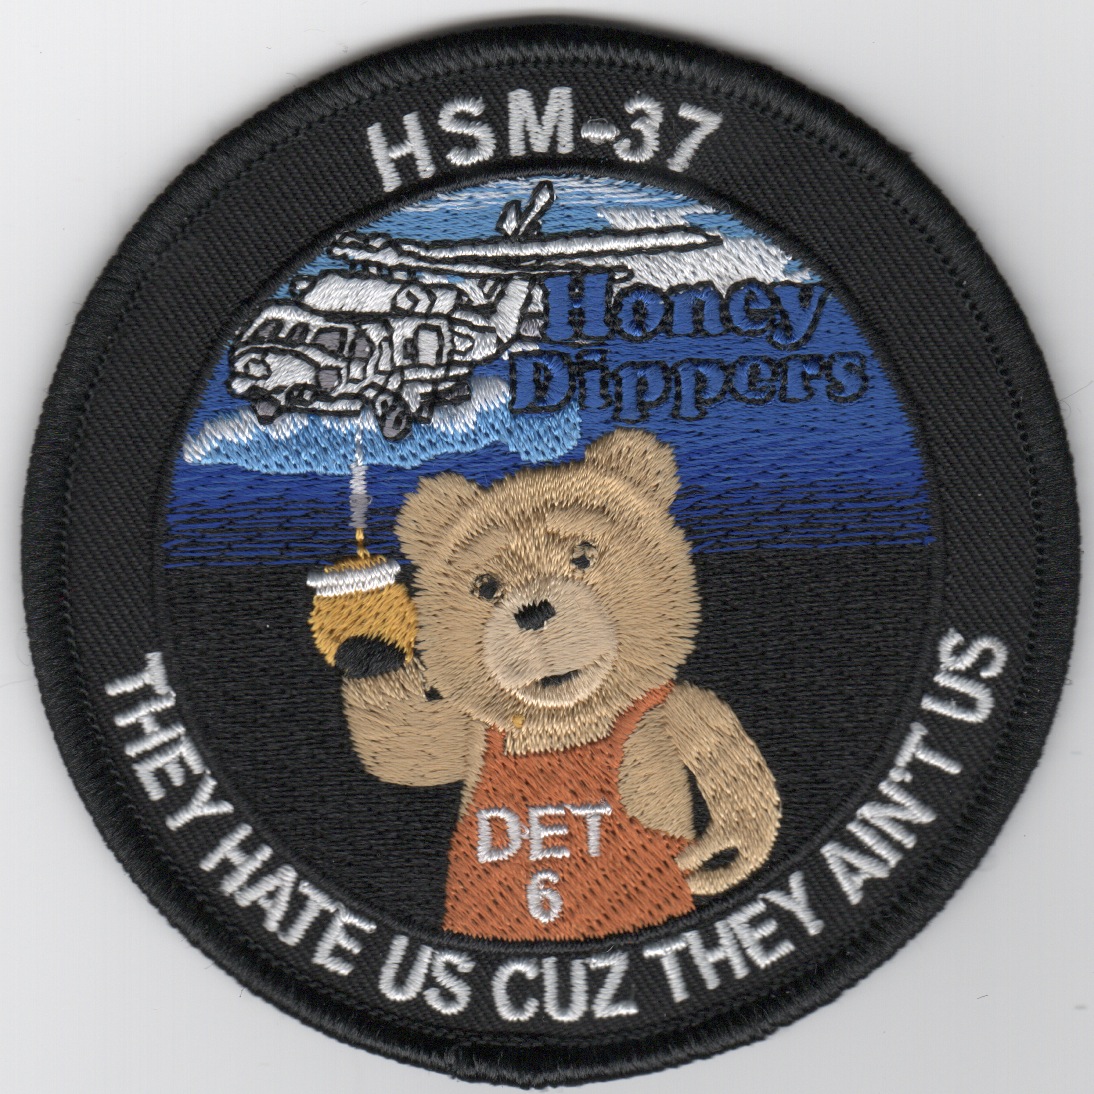 HSM-37 Det-6 'Honey Dippers'